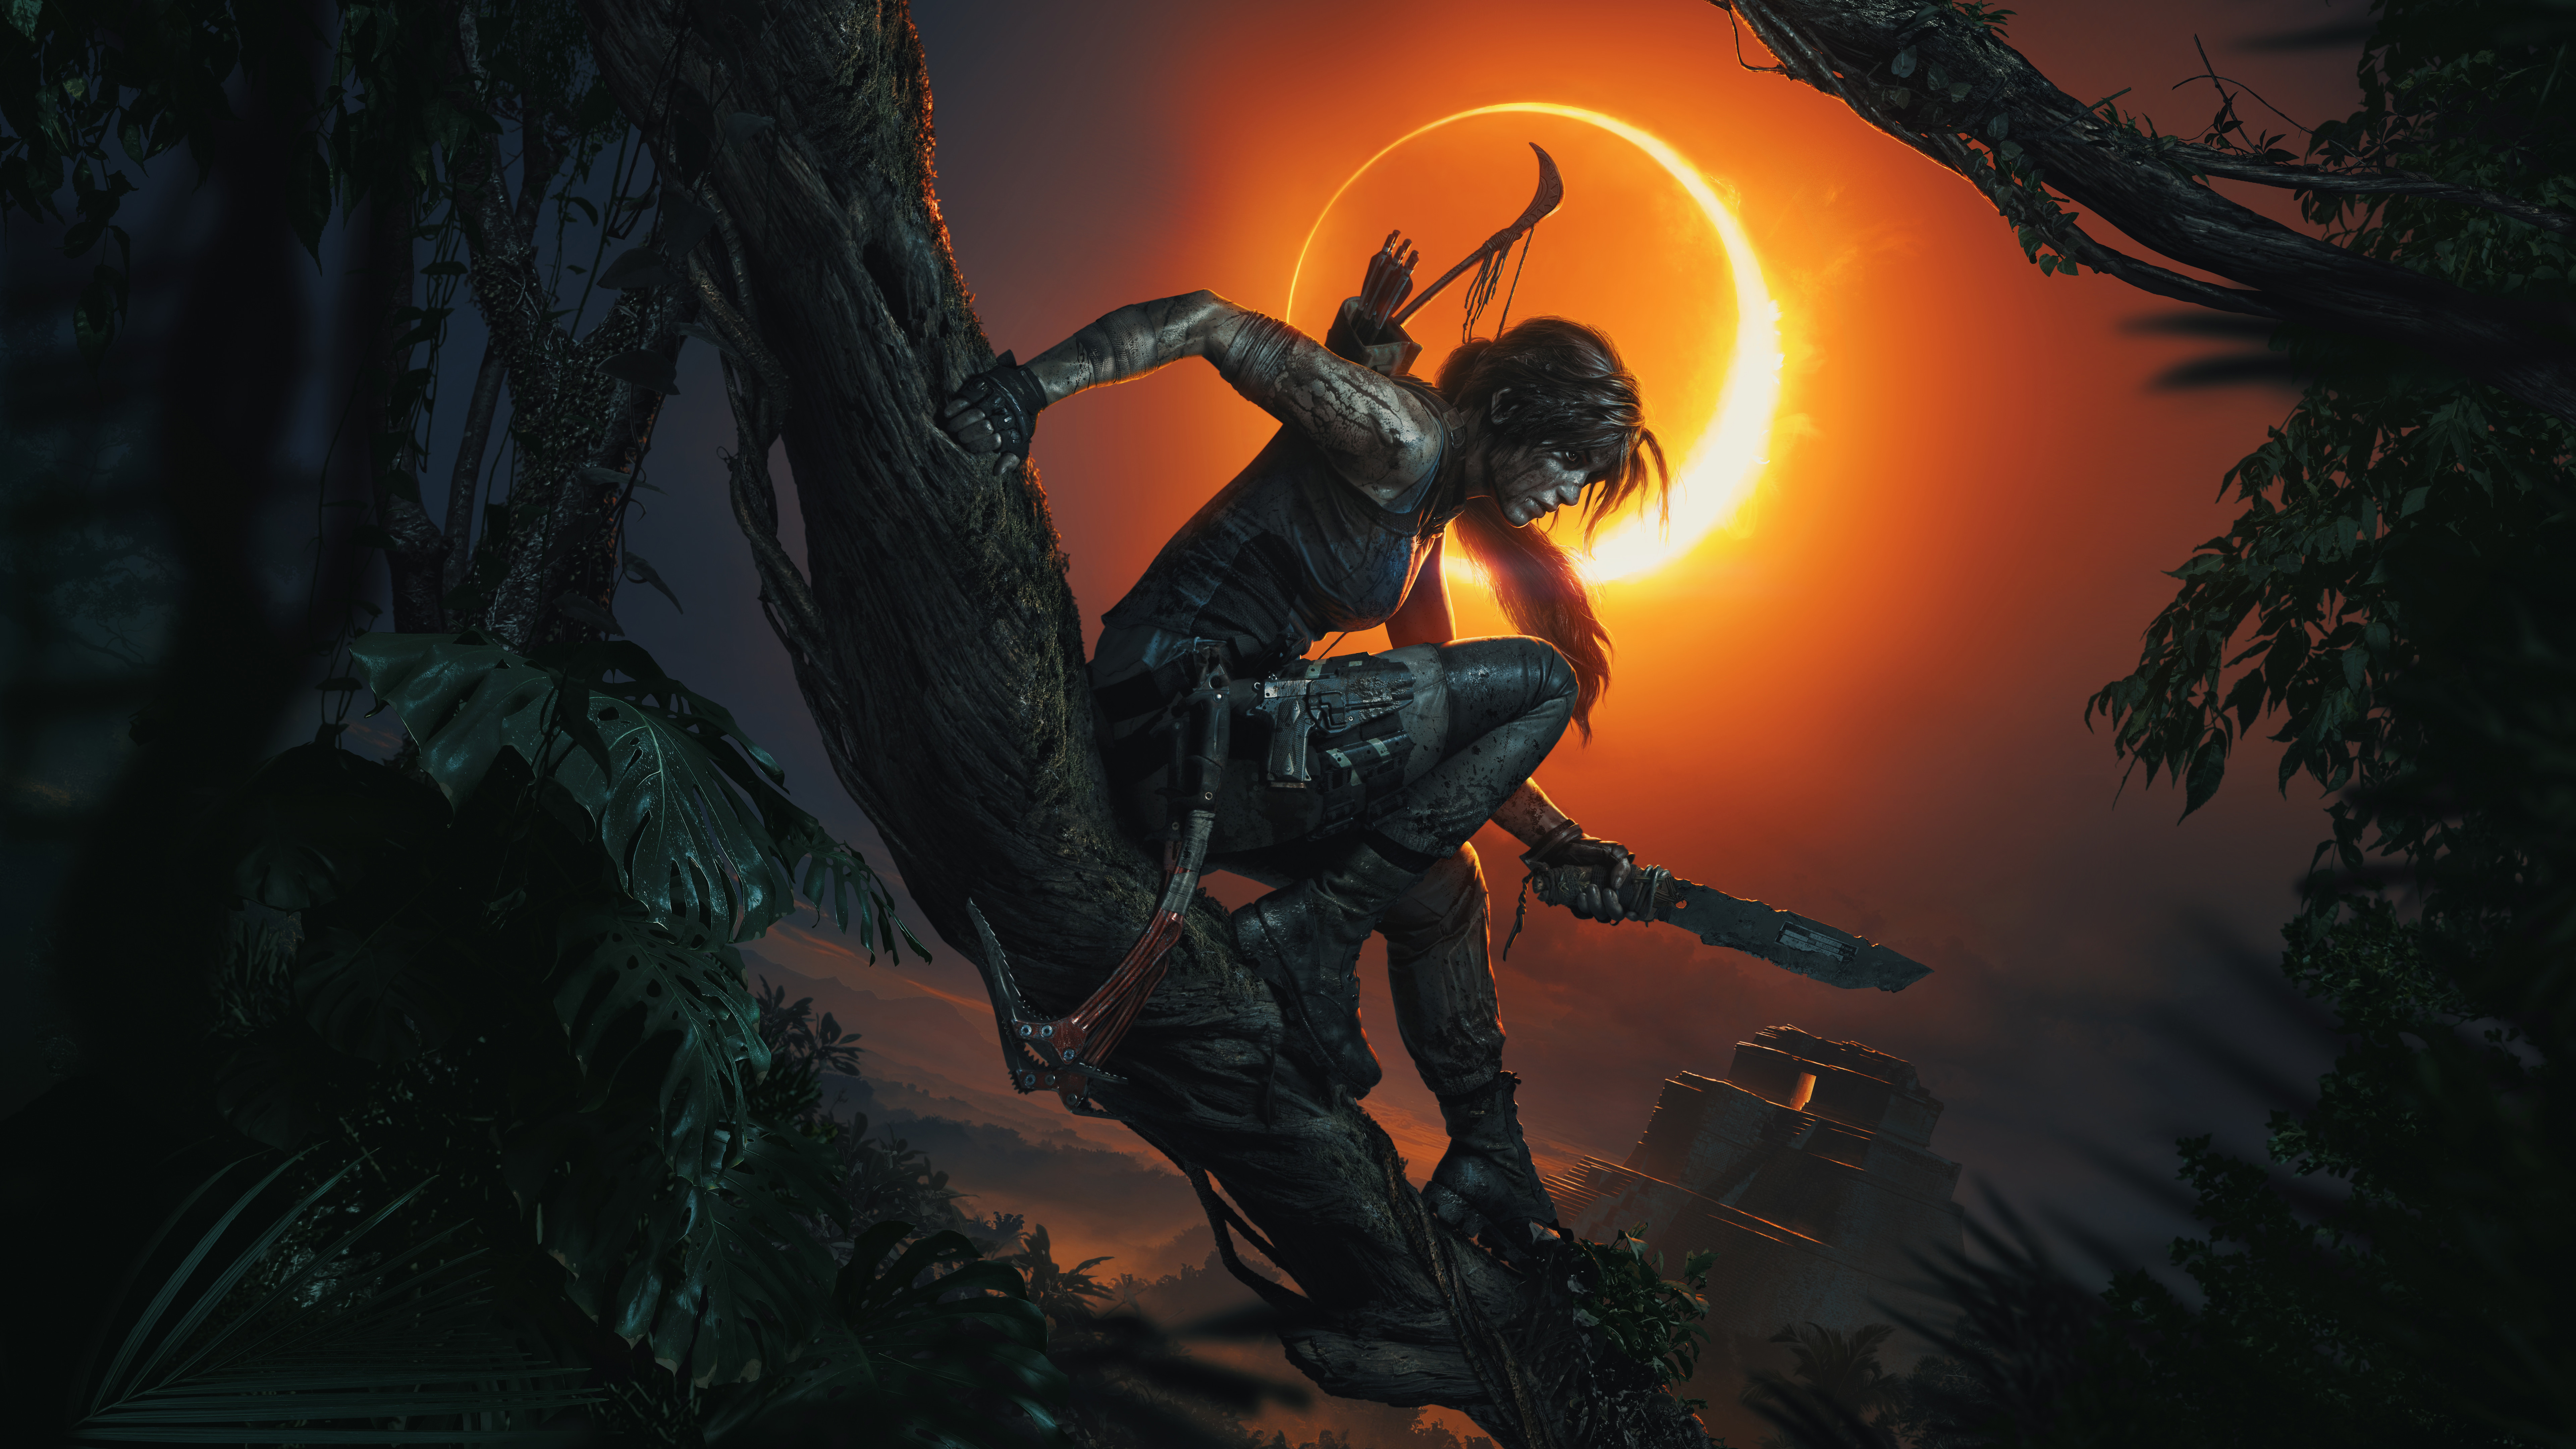 tomb raider wallpaper,action adventure game,cg artwork,demon,fictional character,adventure game